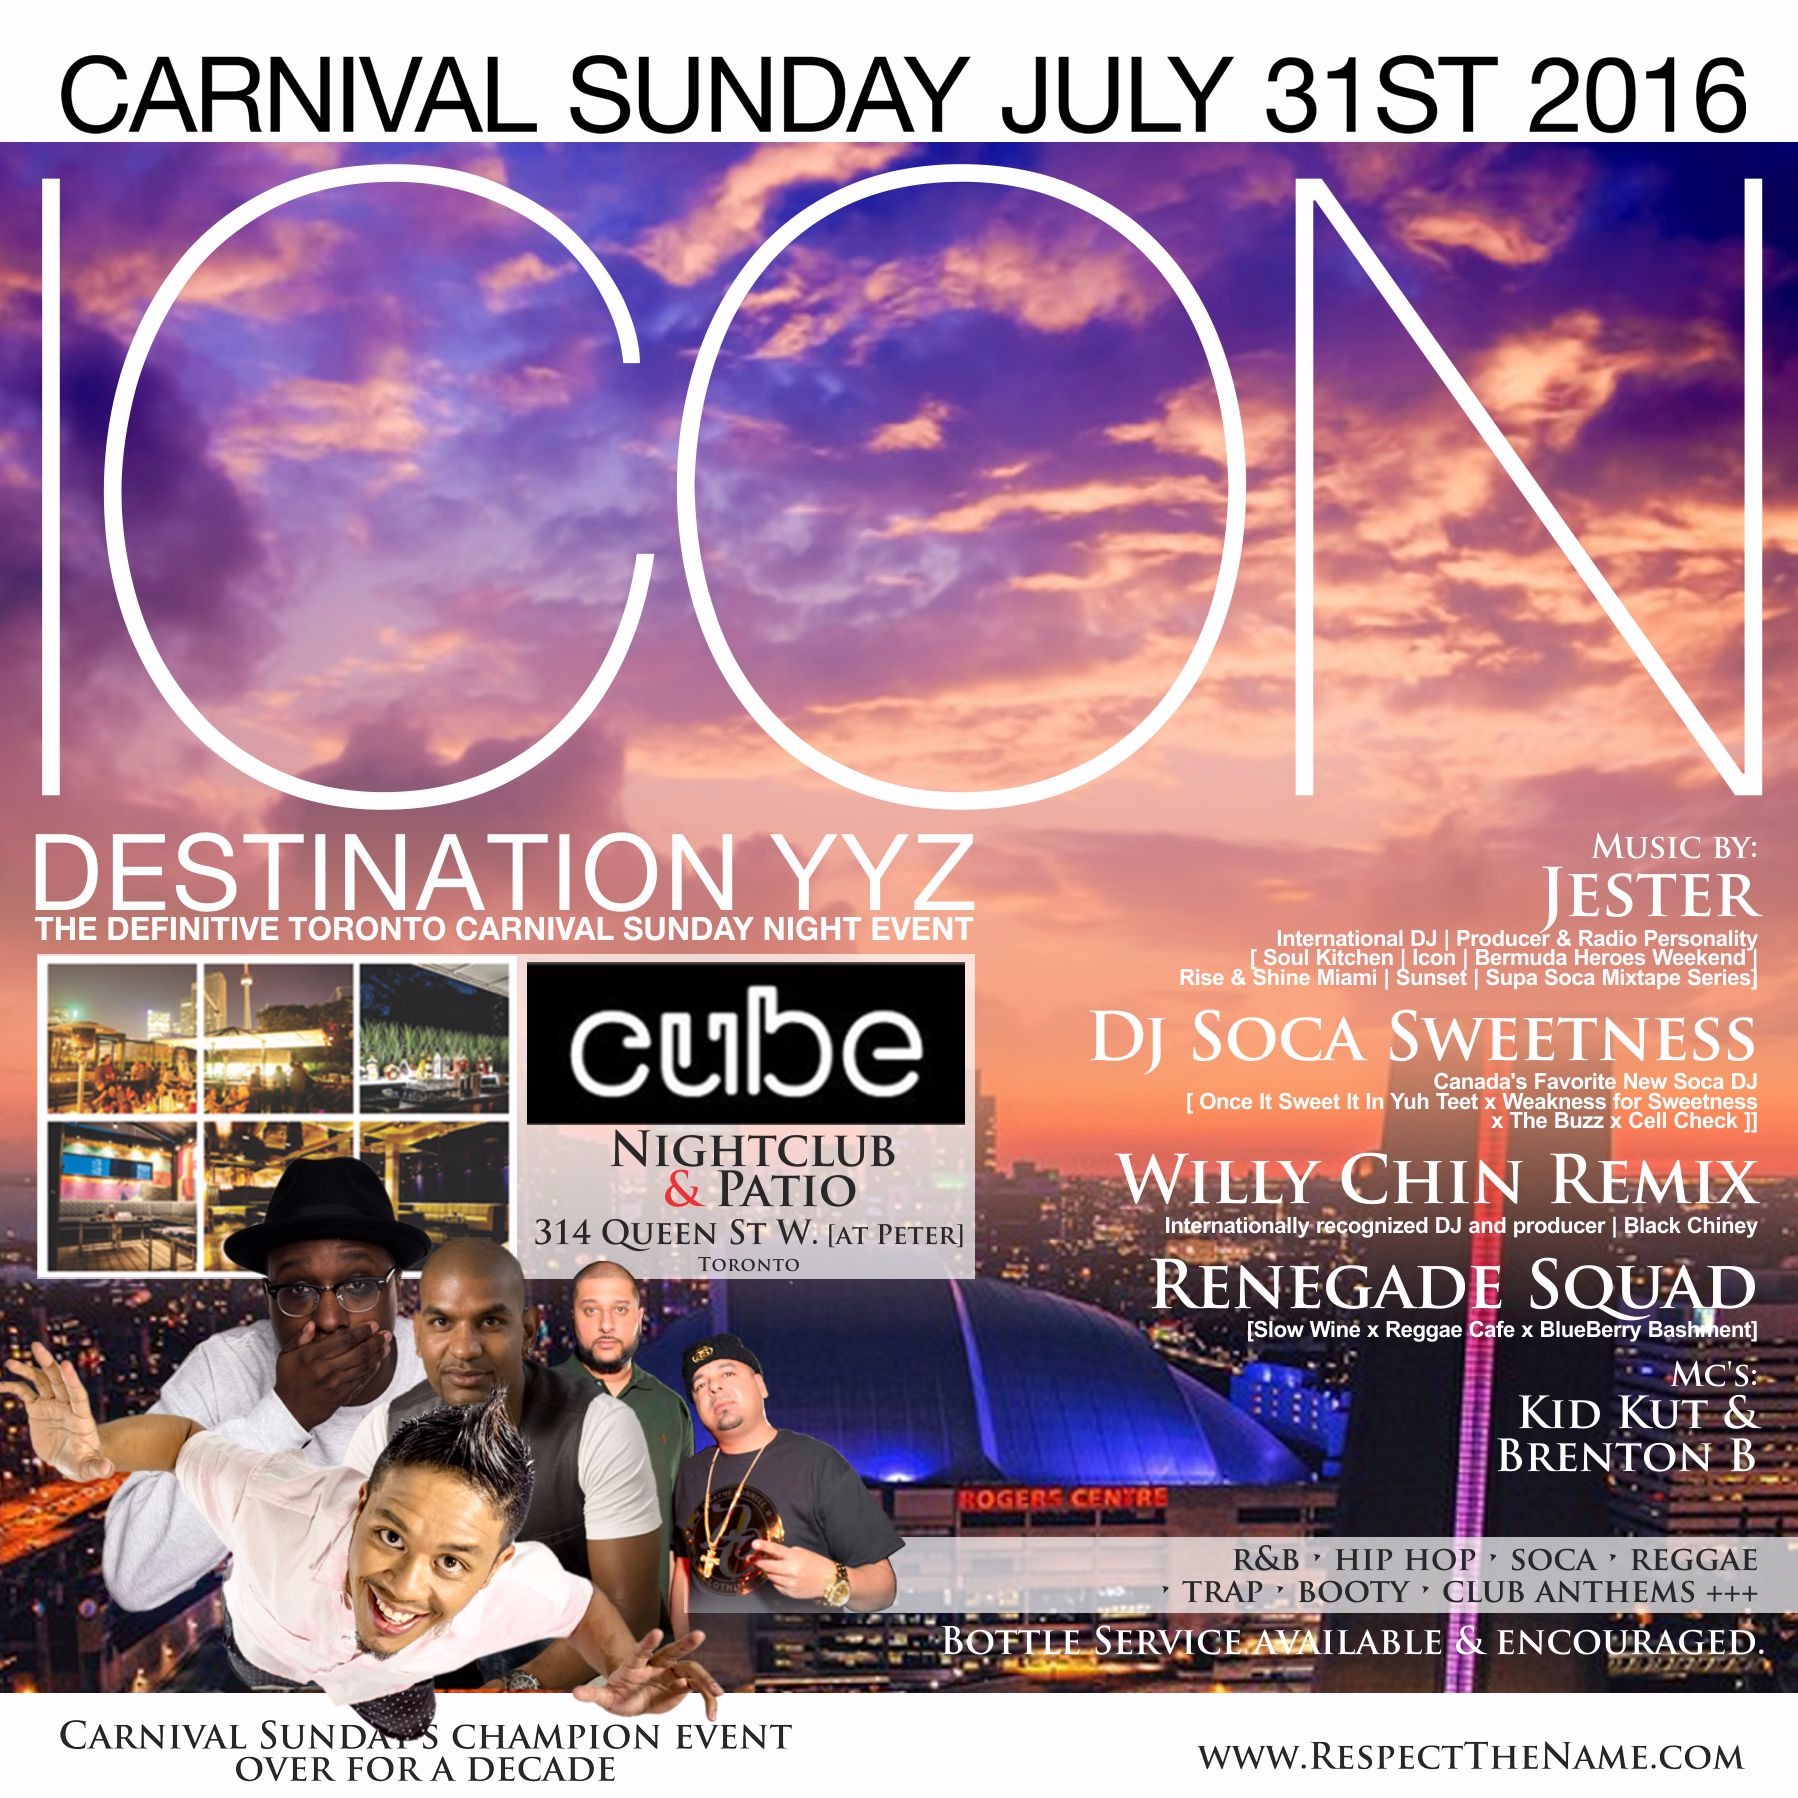 ICON: DESTINATION YYZ - The Definitive Toronto Carnival Sunday Night Event